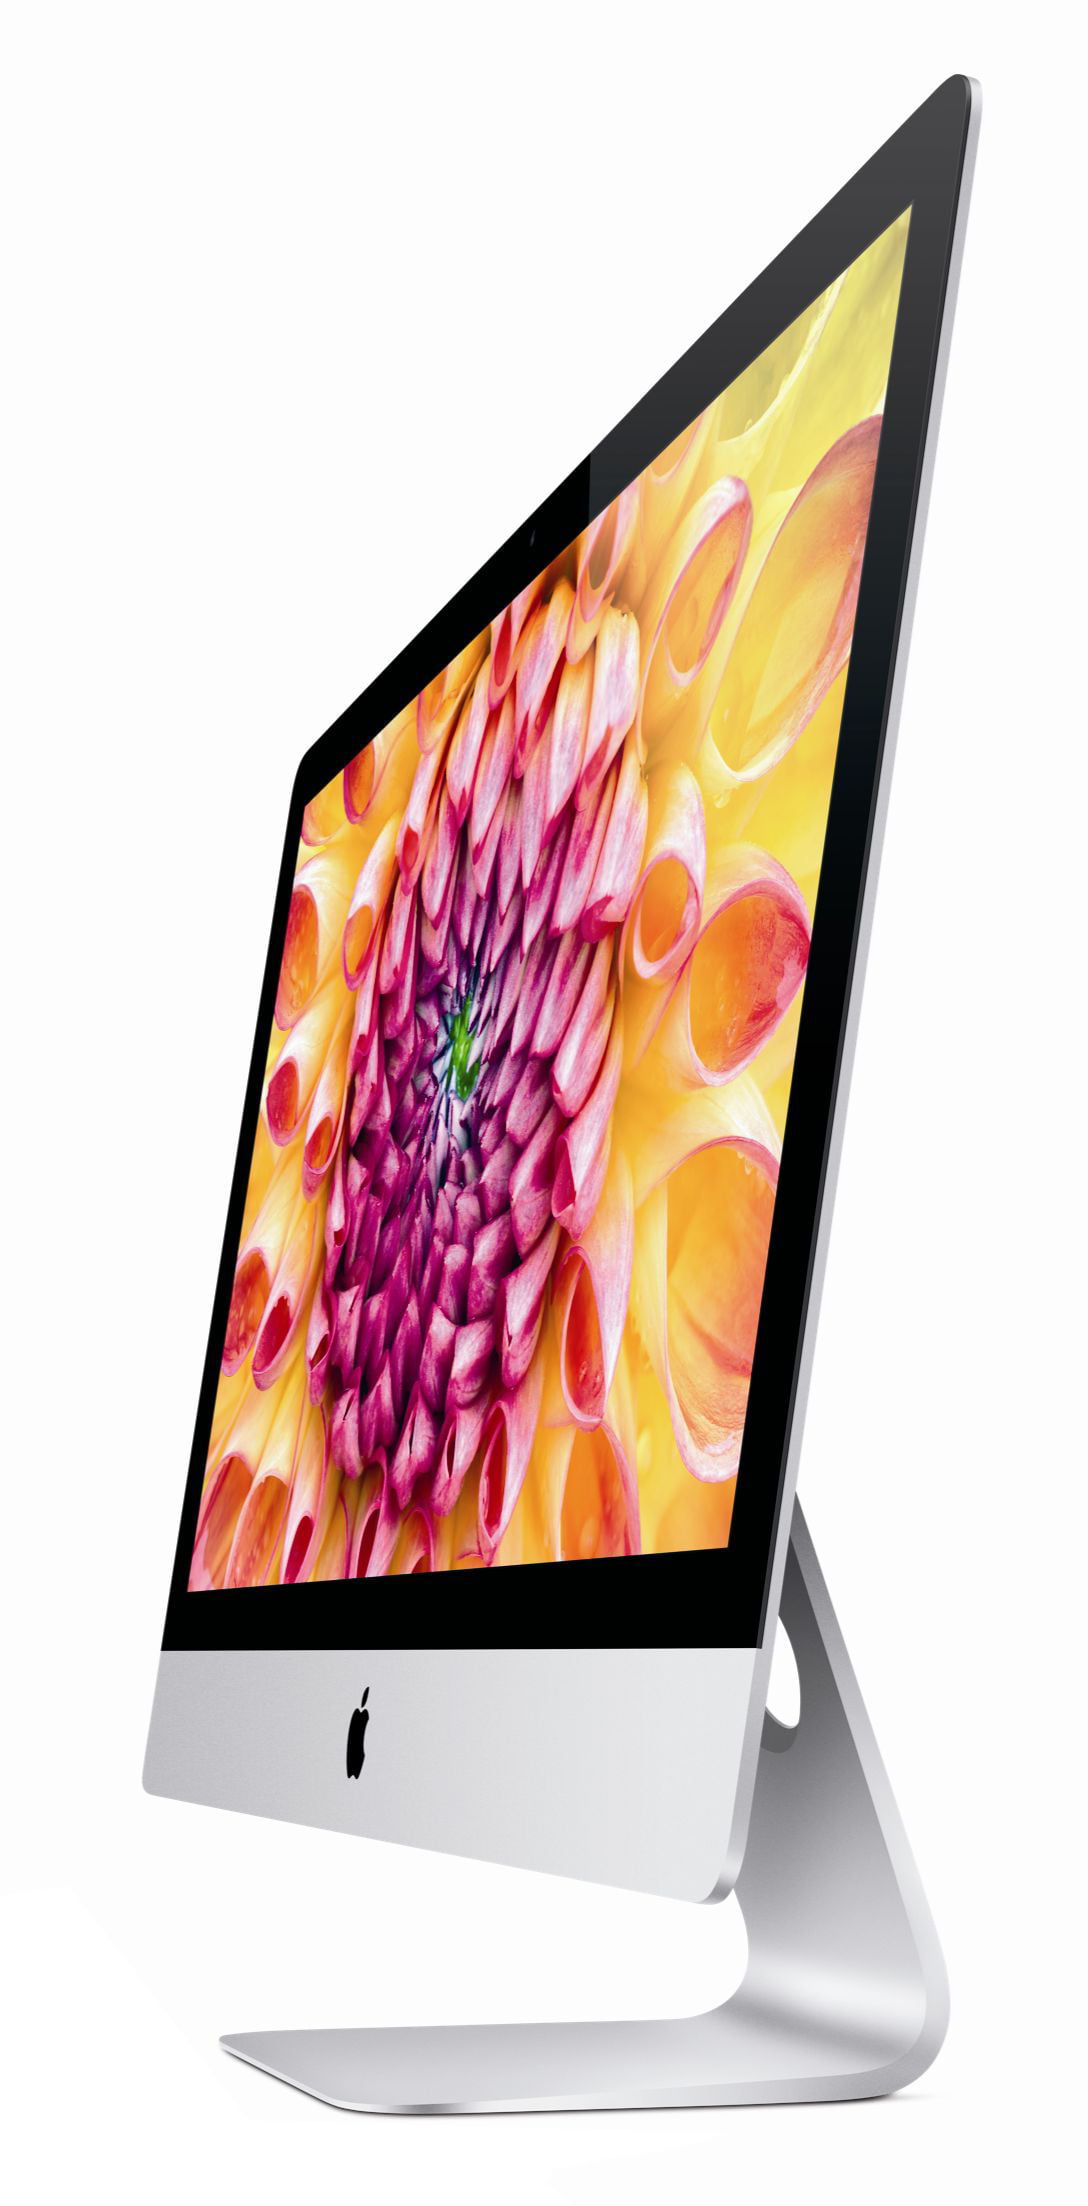 PC/タブレット デスクトップ型PC Restored Apple iMac 21.5-inch 2.7GHZ Quad Core i5 (Late 2012 